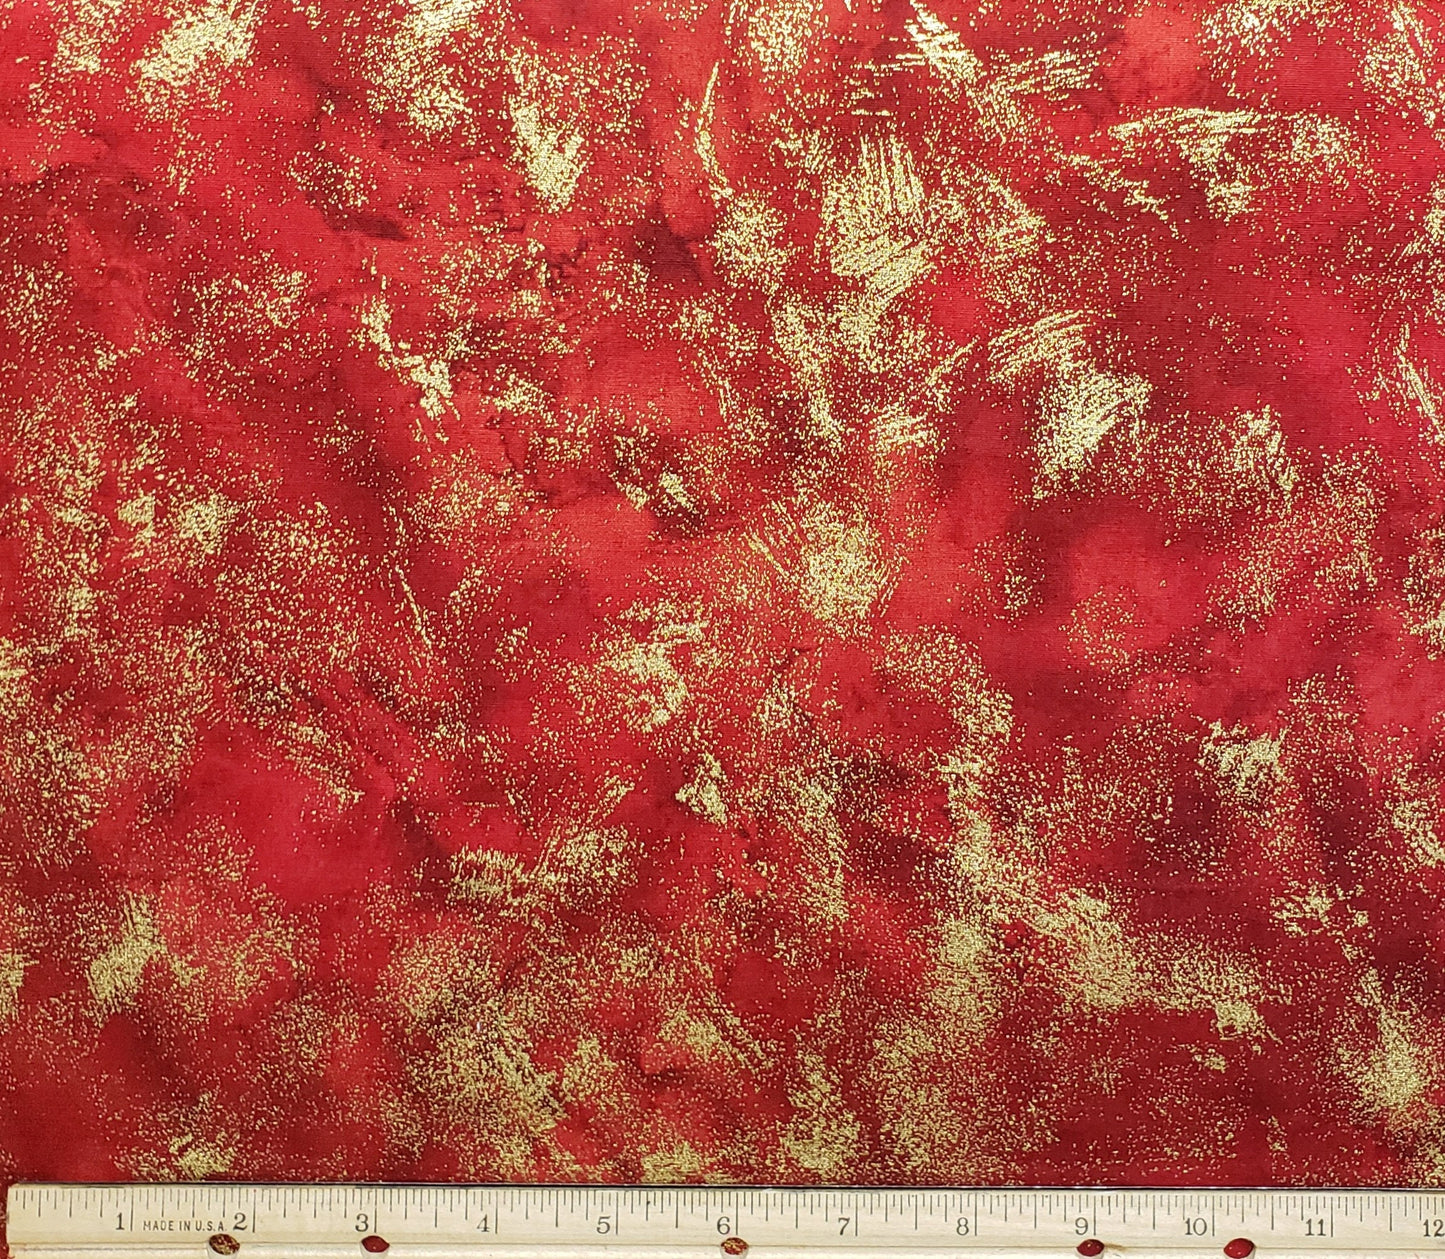 EOB - Marble Mate by Moda Pattern #9897 - Mottled Deeper Red Fabric with Metallic Gold Splattered Brushstroke Pattern